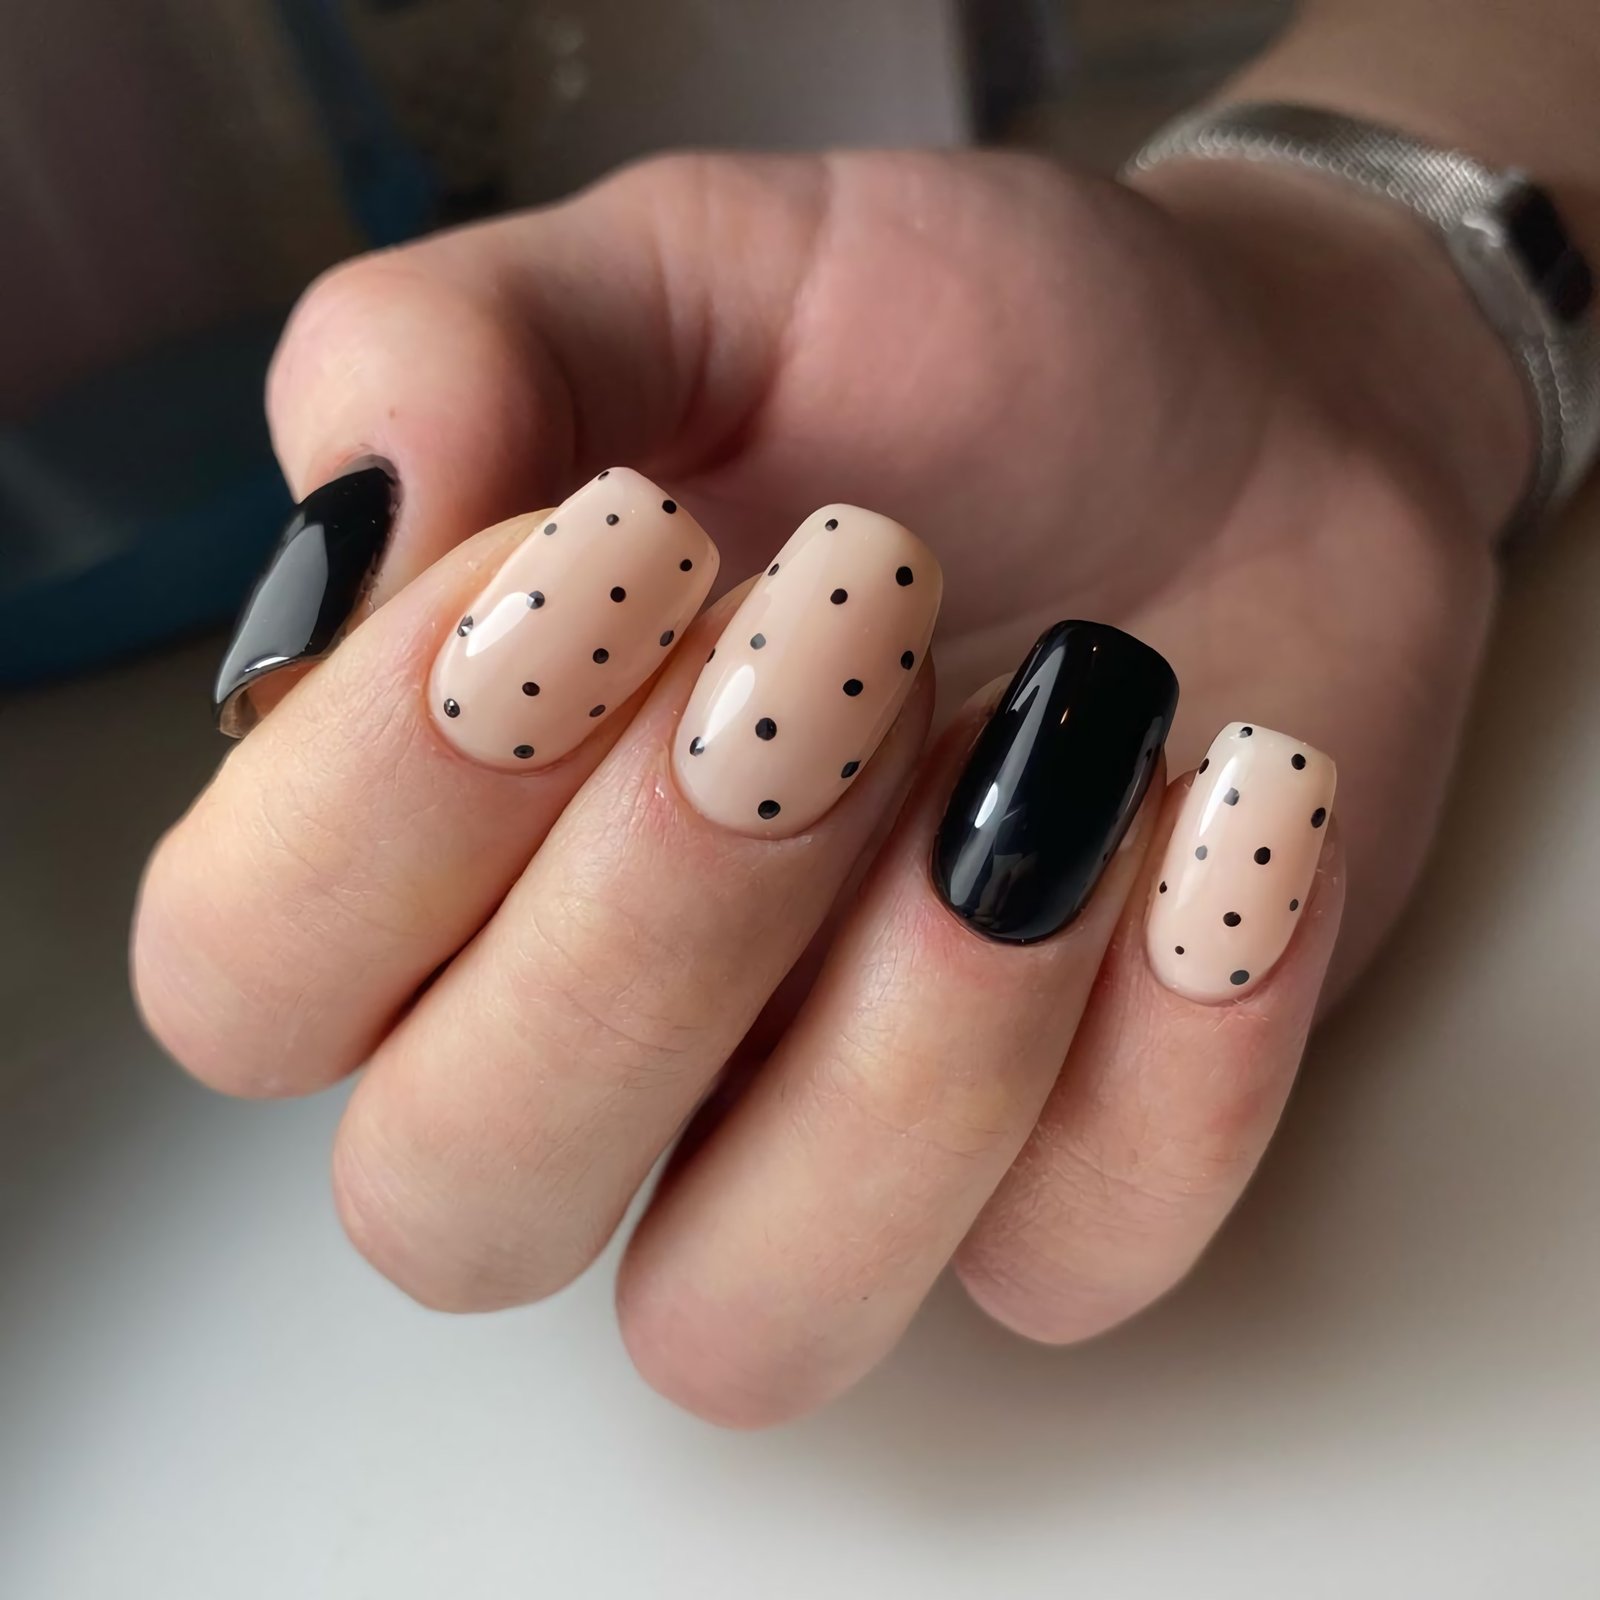 beautiful short nails with dots